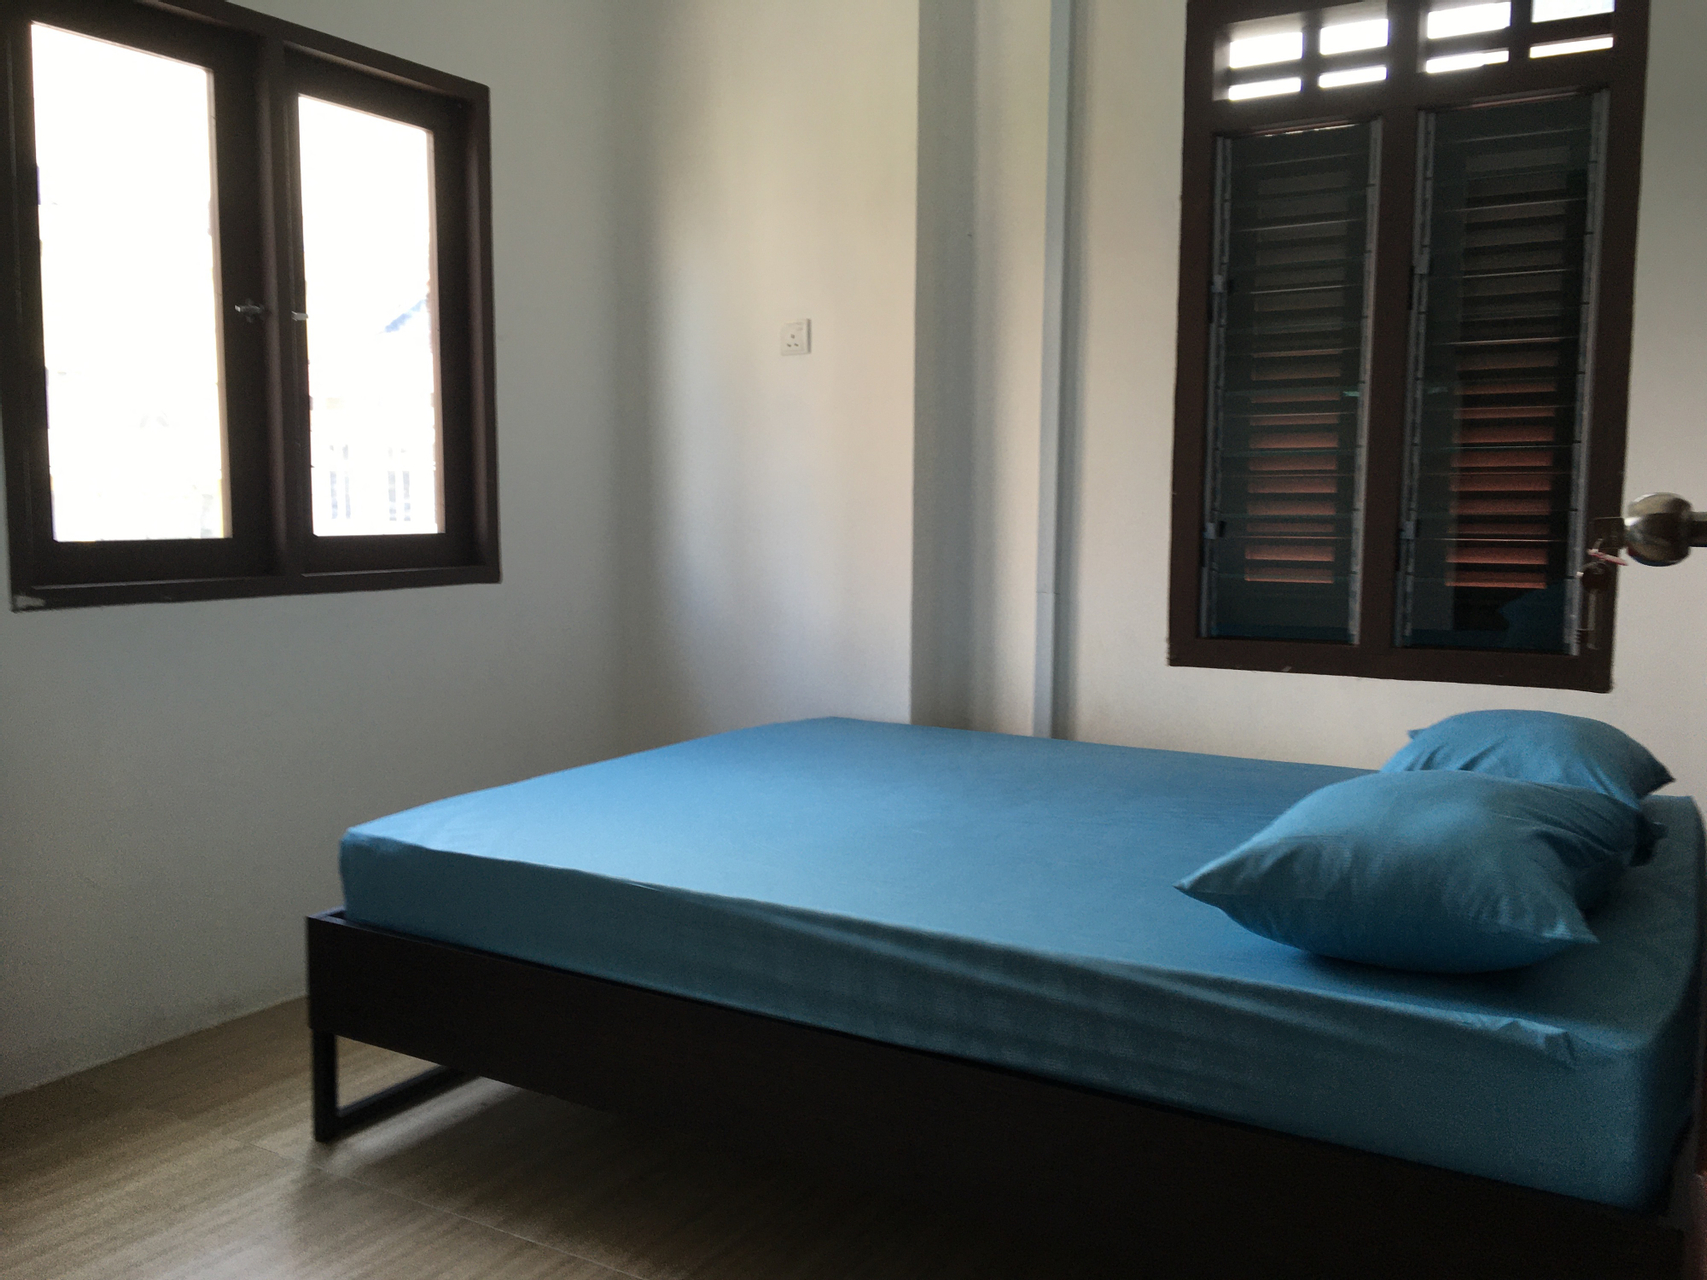 Bedroom 4, Homey Hostel, Kinta